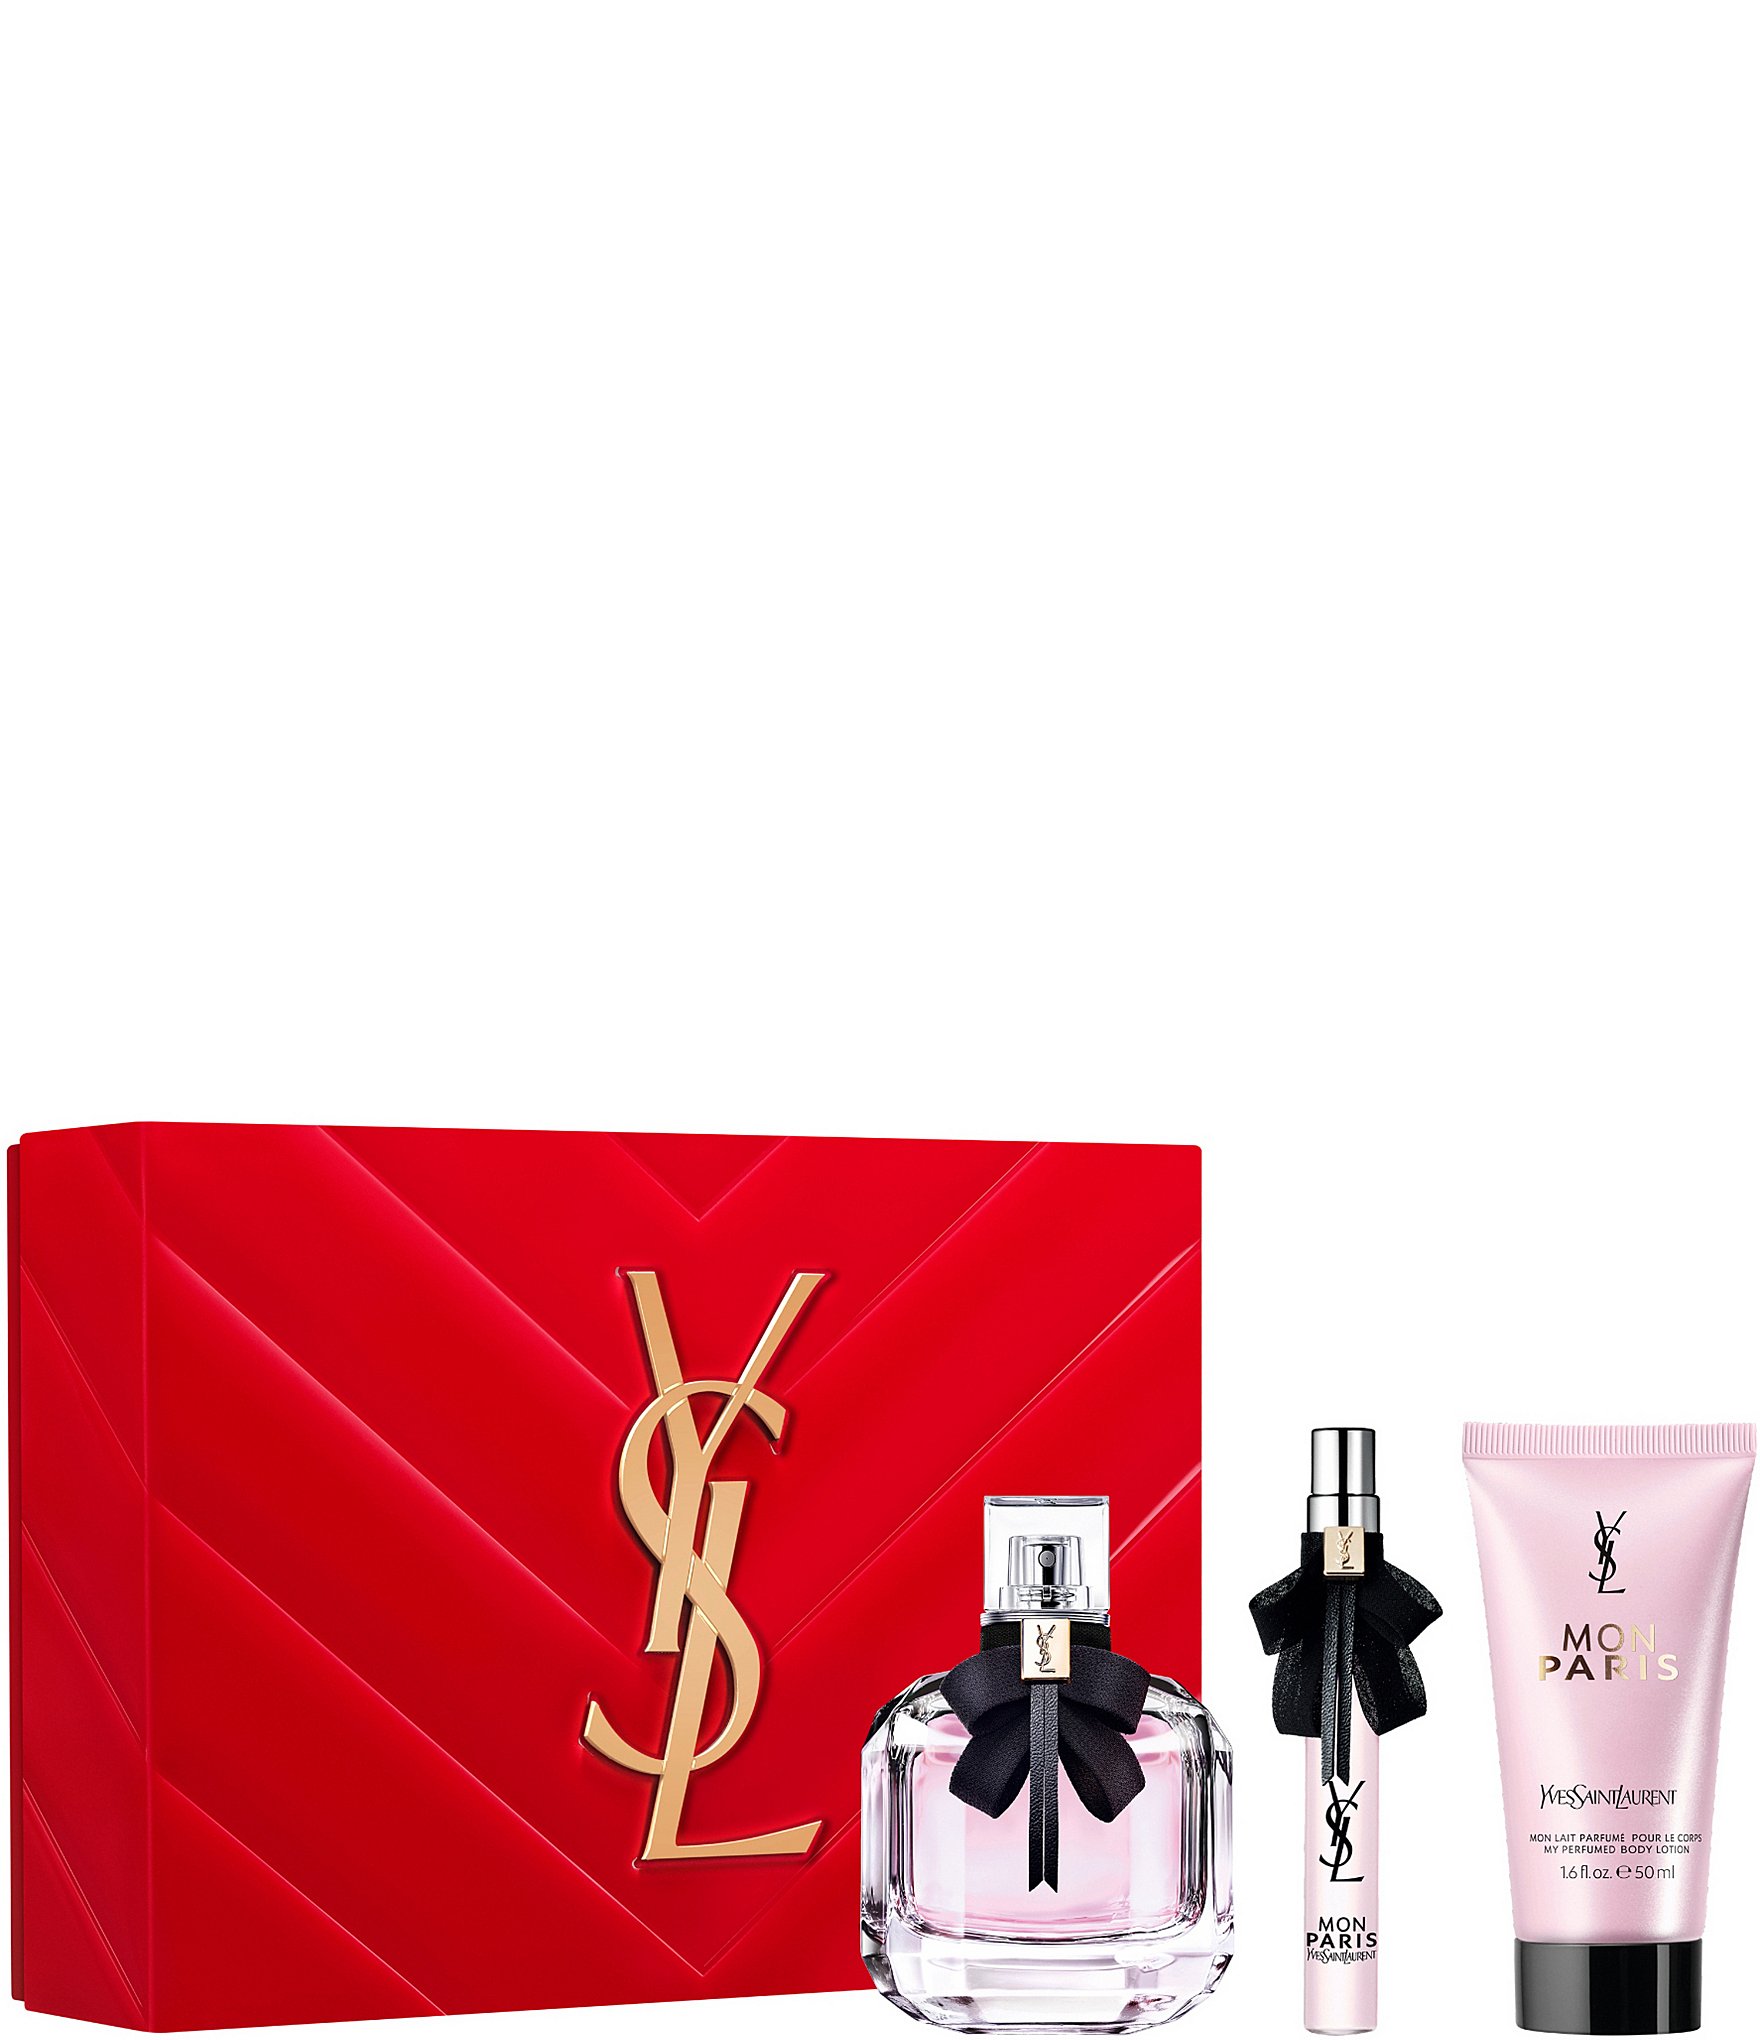 Yves Saint Laurent Gift Set Parisian Vibe confezione regalo da donna